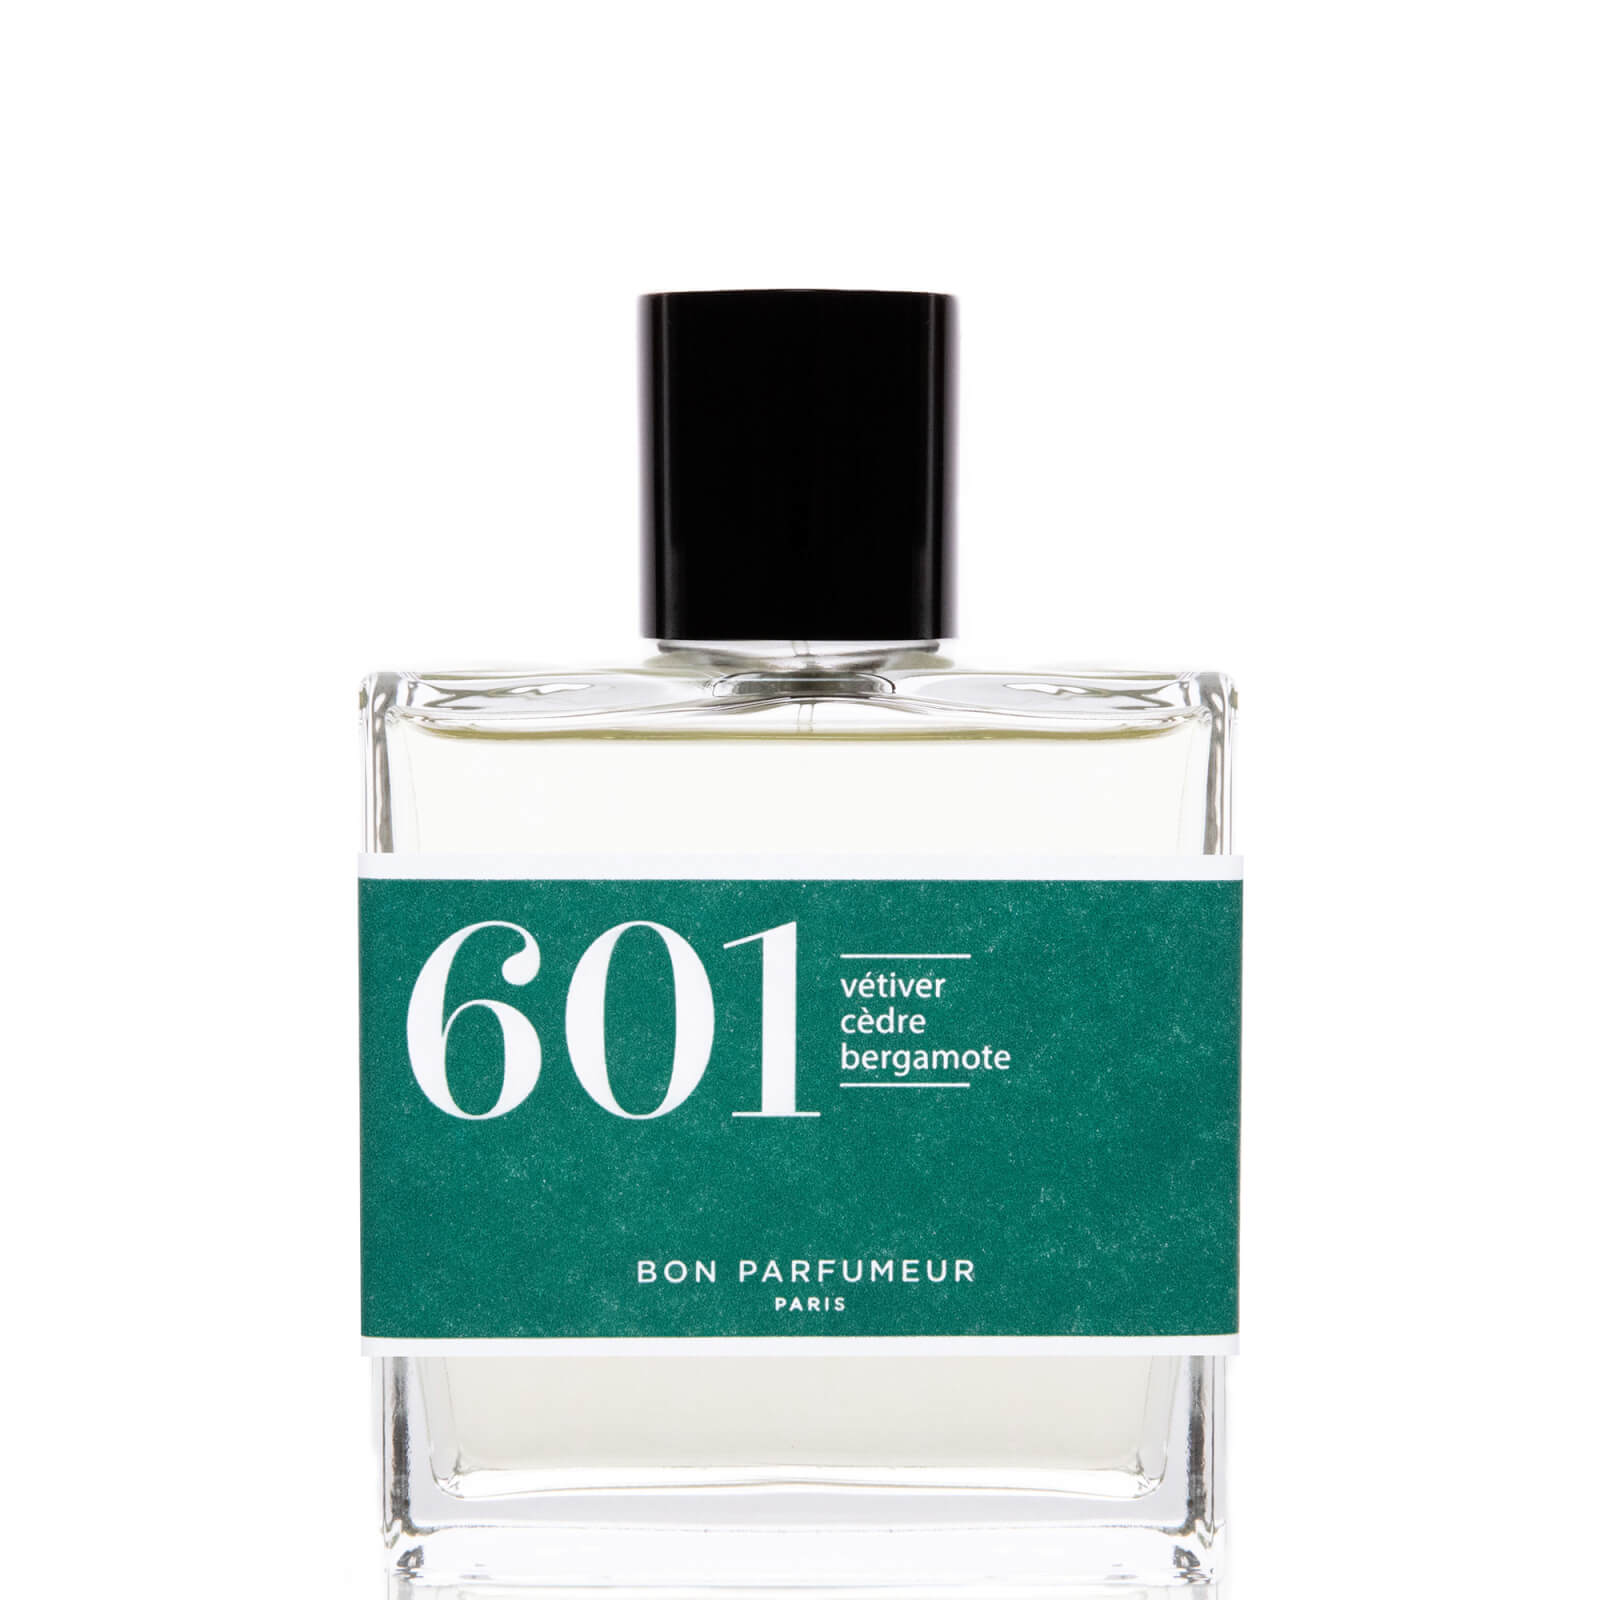 bon-parfumeur-601-vetiver-cedar-bergamot-eau-de-parfum-100ml